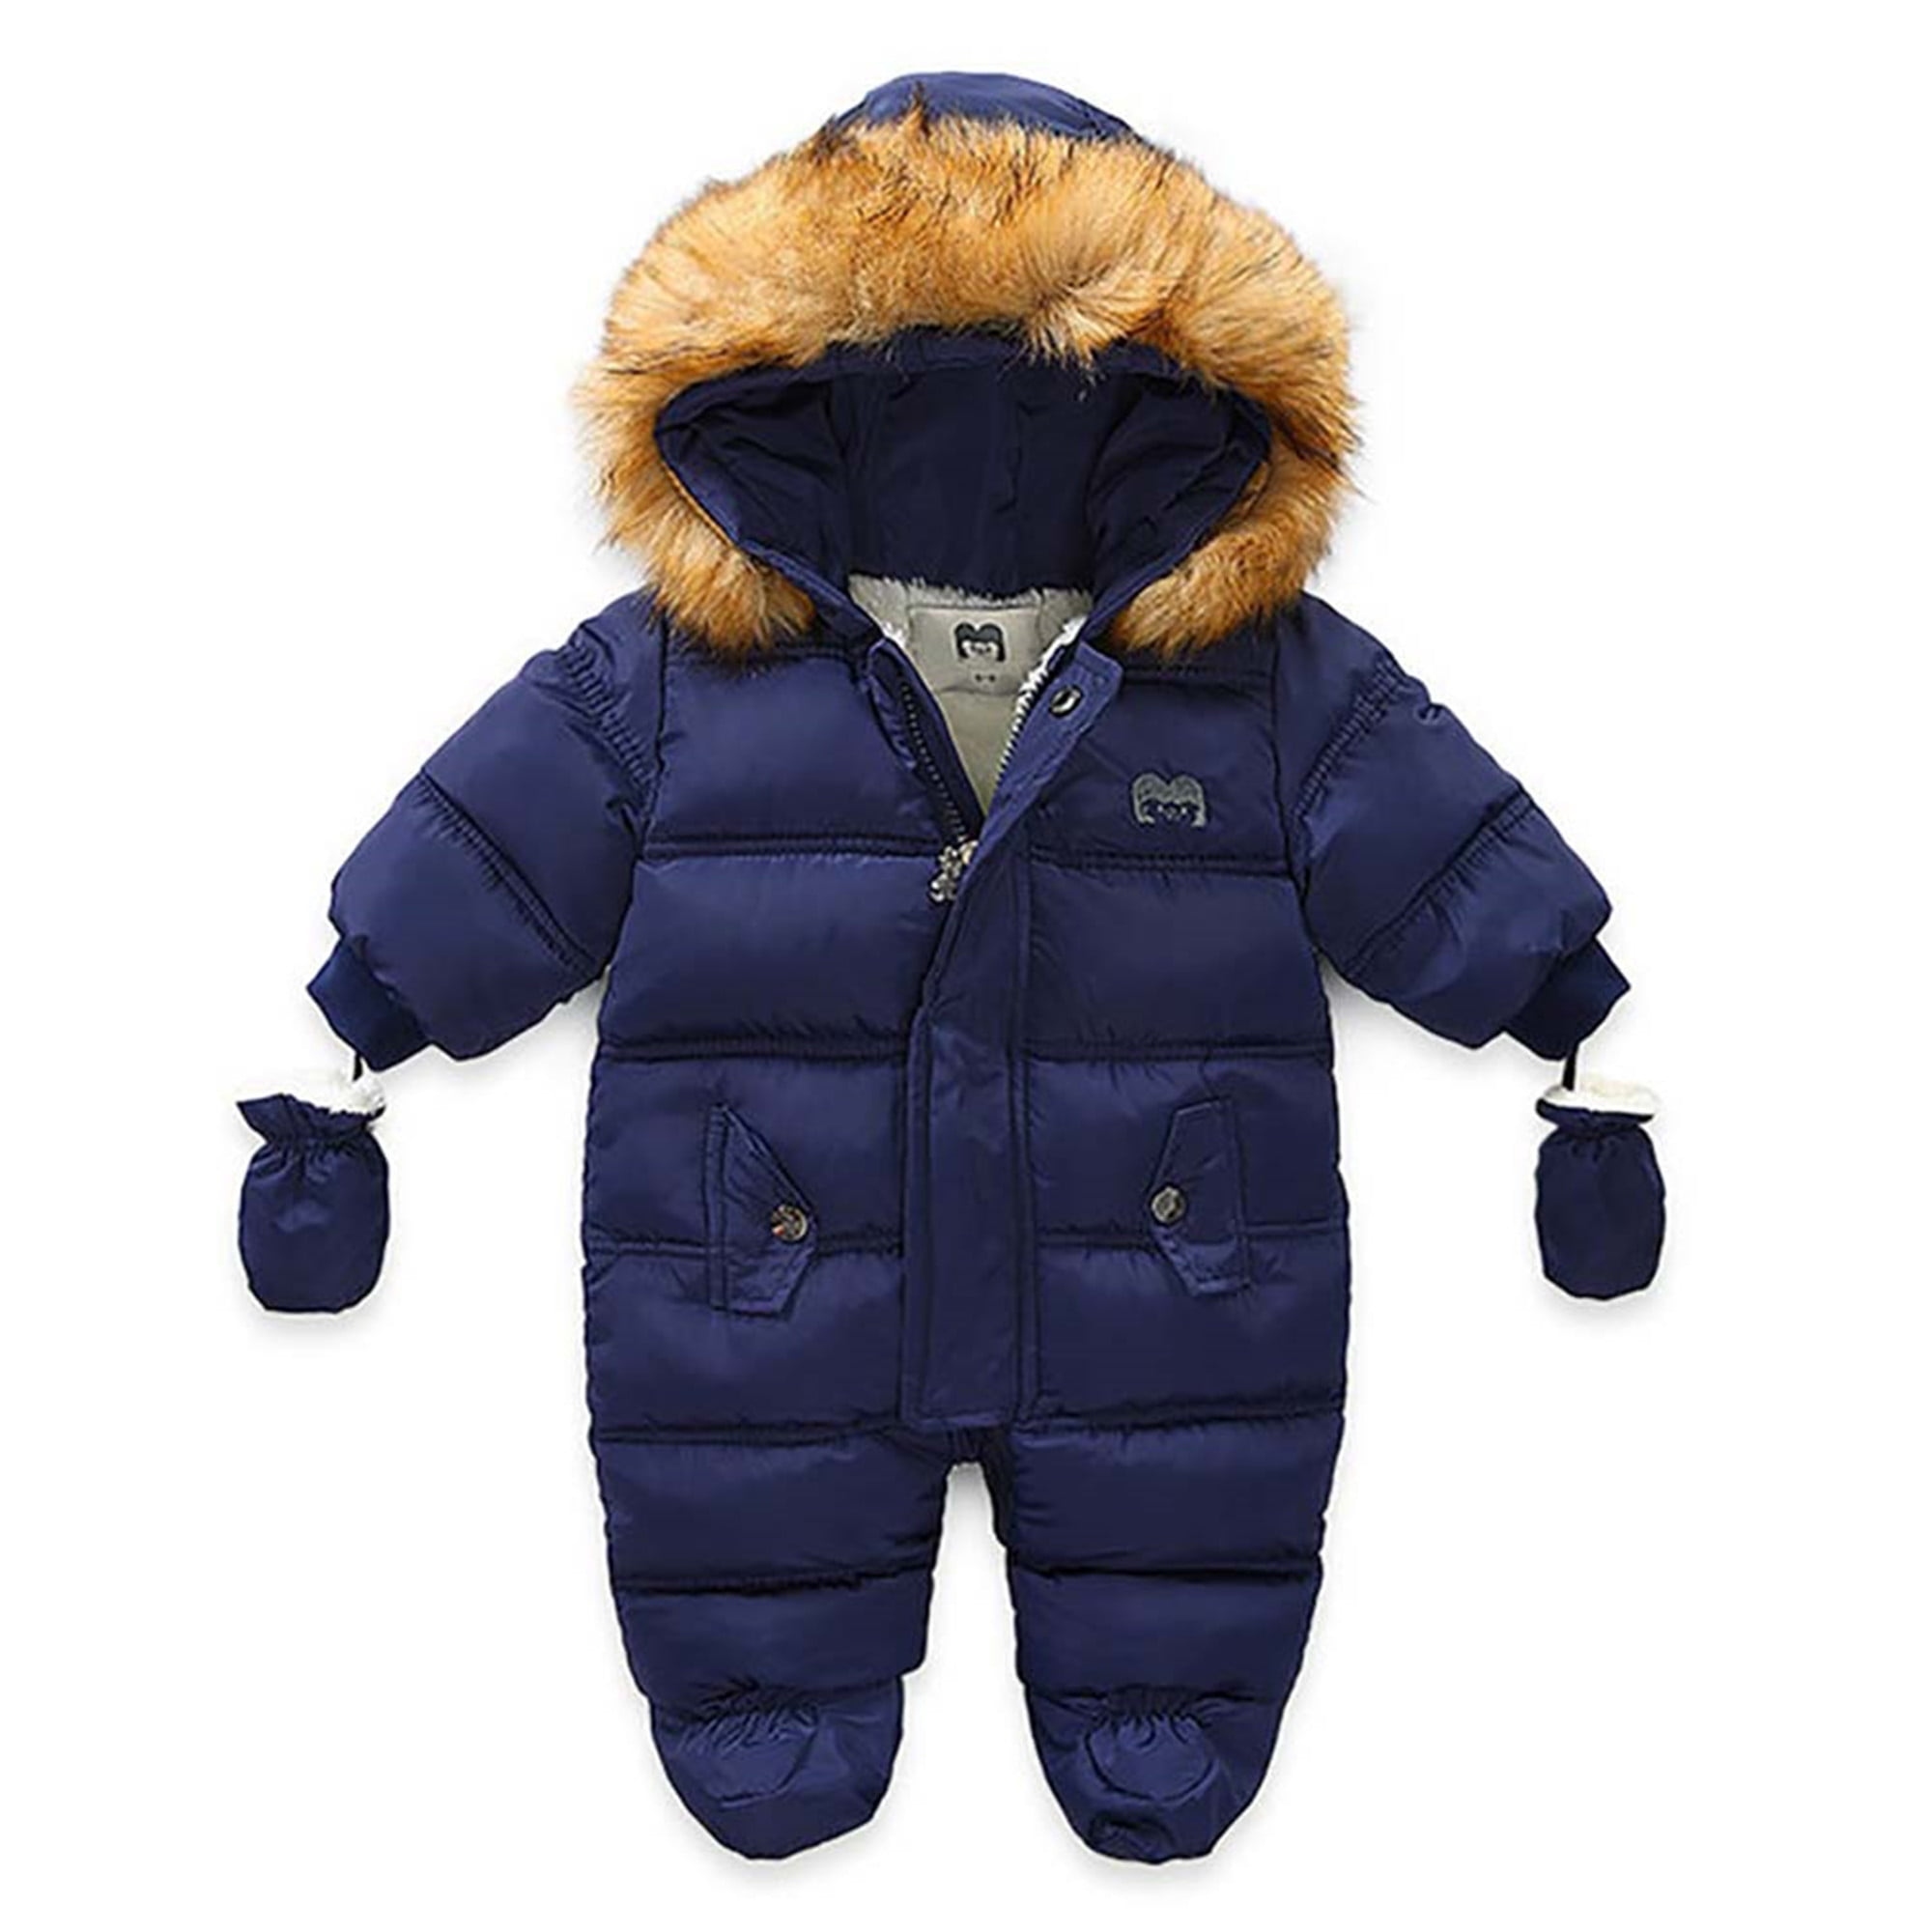 Newborn Baby Boys Girls Winter Fleece Snowsuits Warm Clothes 3-24 Months Star Striped Hooded Jumpsuit Coats